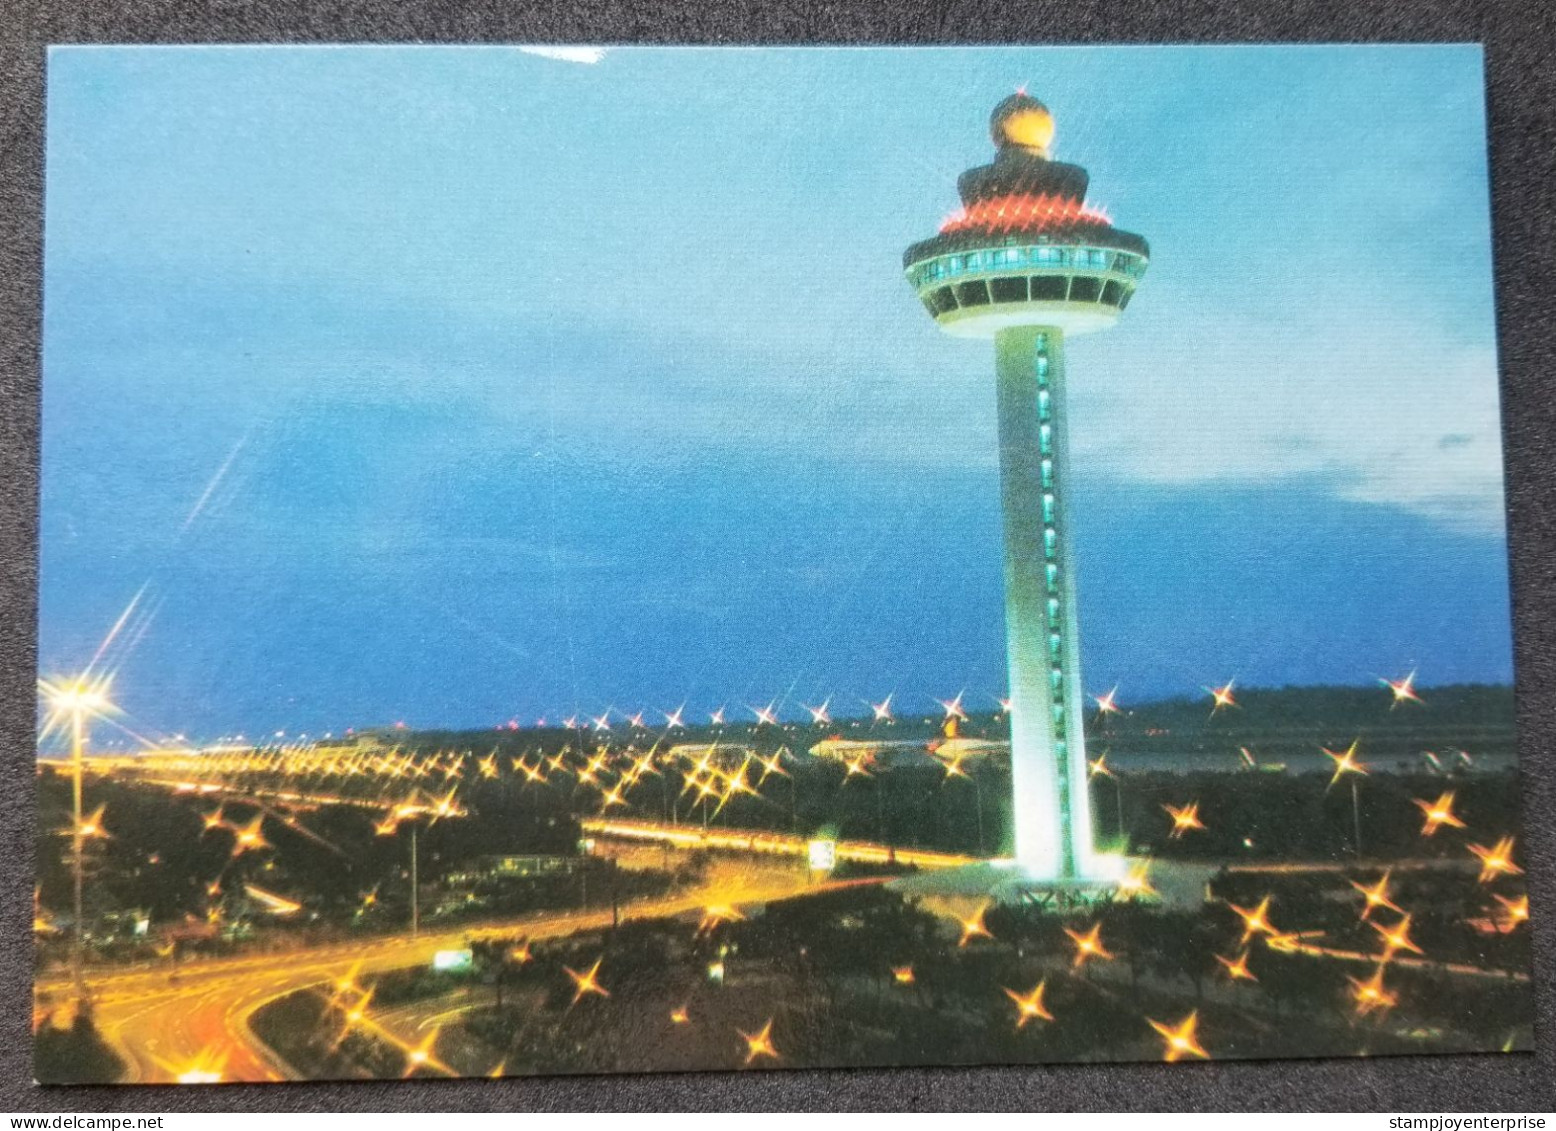 Singapore Night Scene Of Changi Airport Aviation (postcard) MNH *imprint Stamp - Singapore (1959-...)